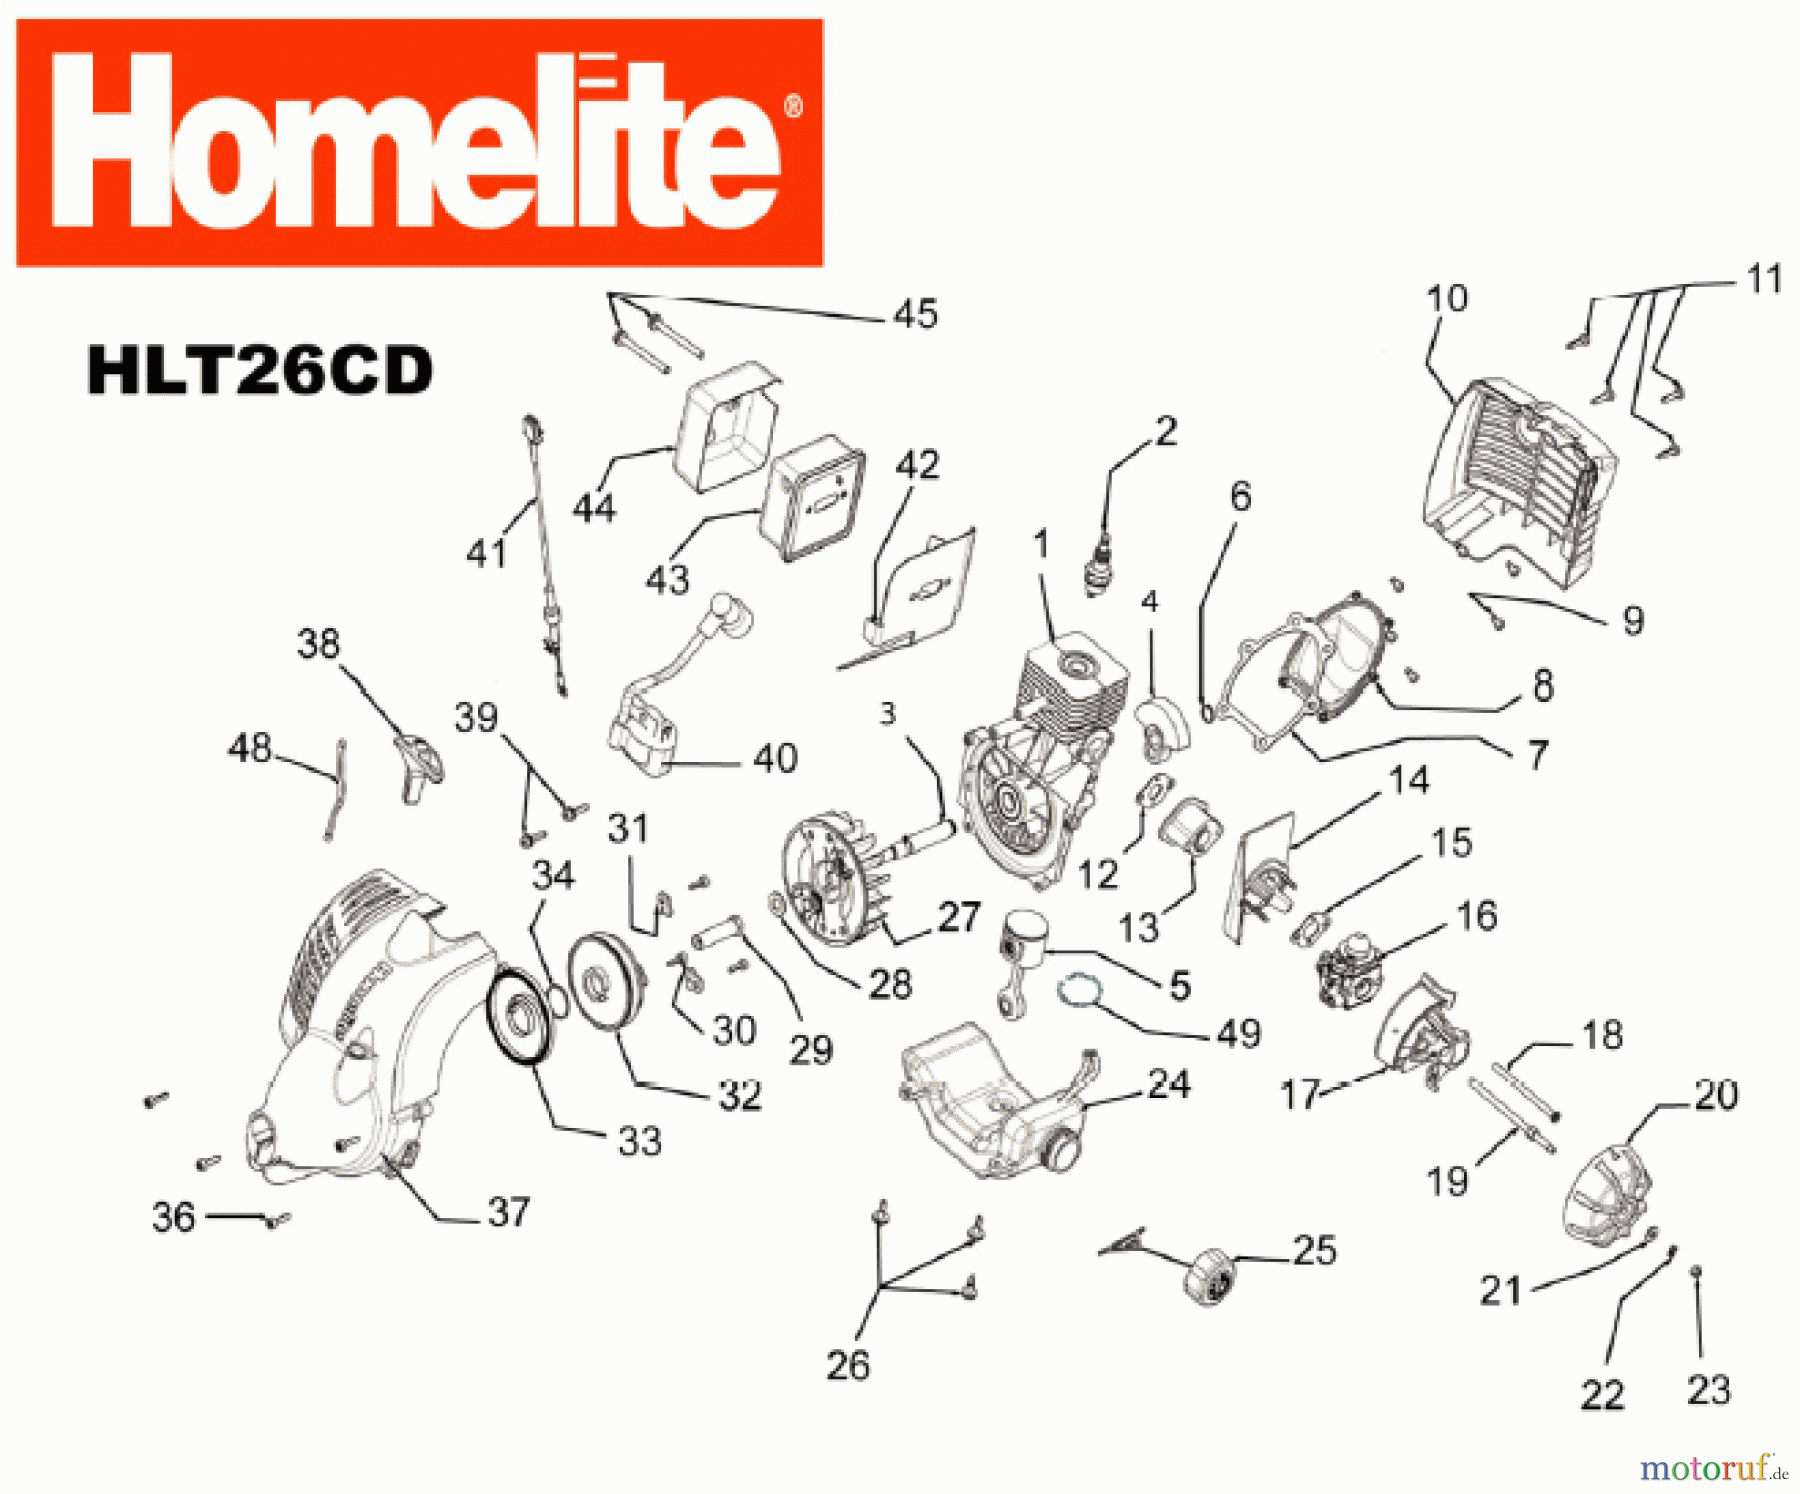 Homelite line trimmer hlt26cd manual